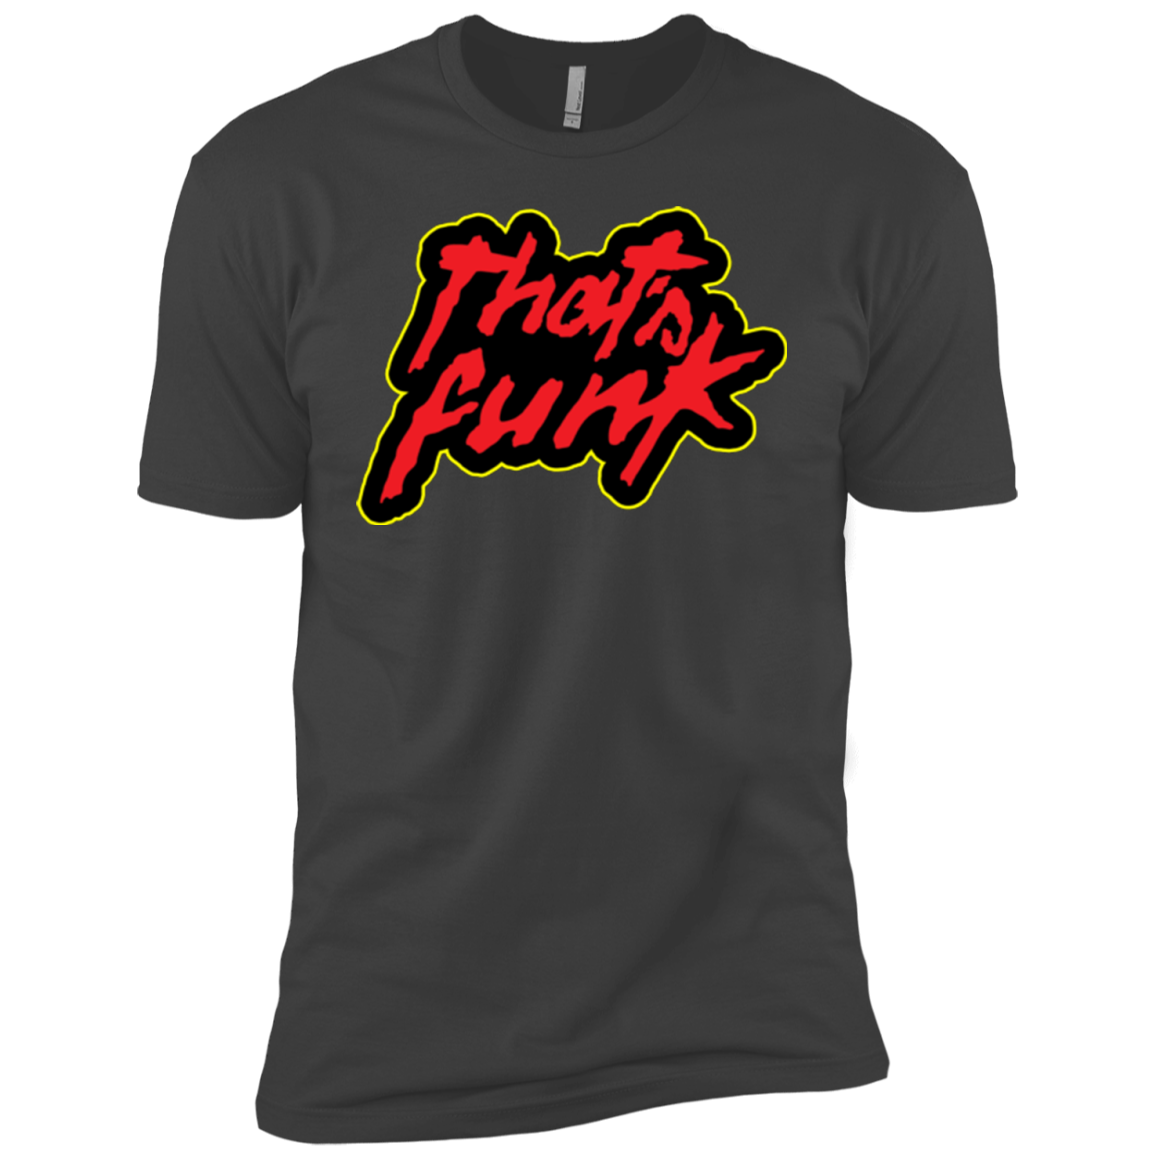 Dat Funk Boys Premium T-Shirt